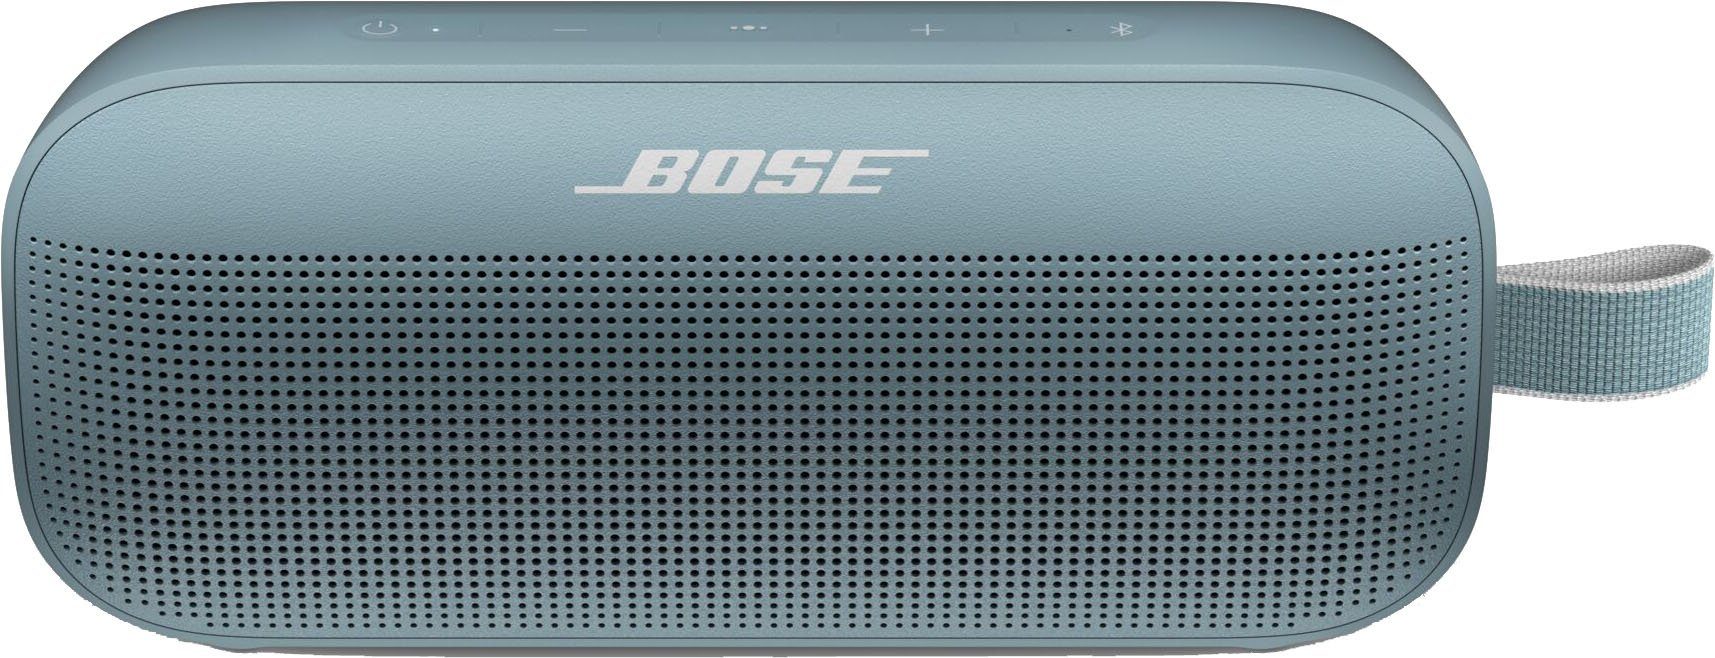 (Bluetooth) blau Flex Bose Stereo Lautsprecher SoundLink